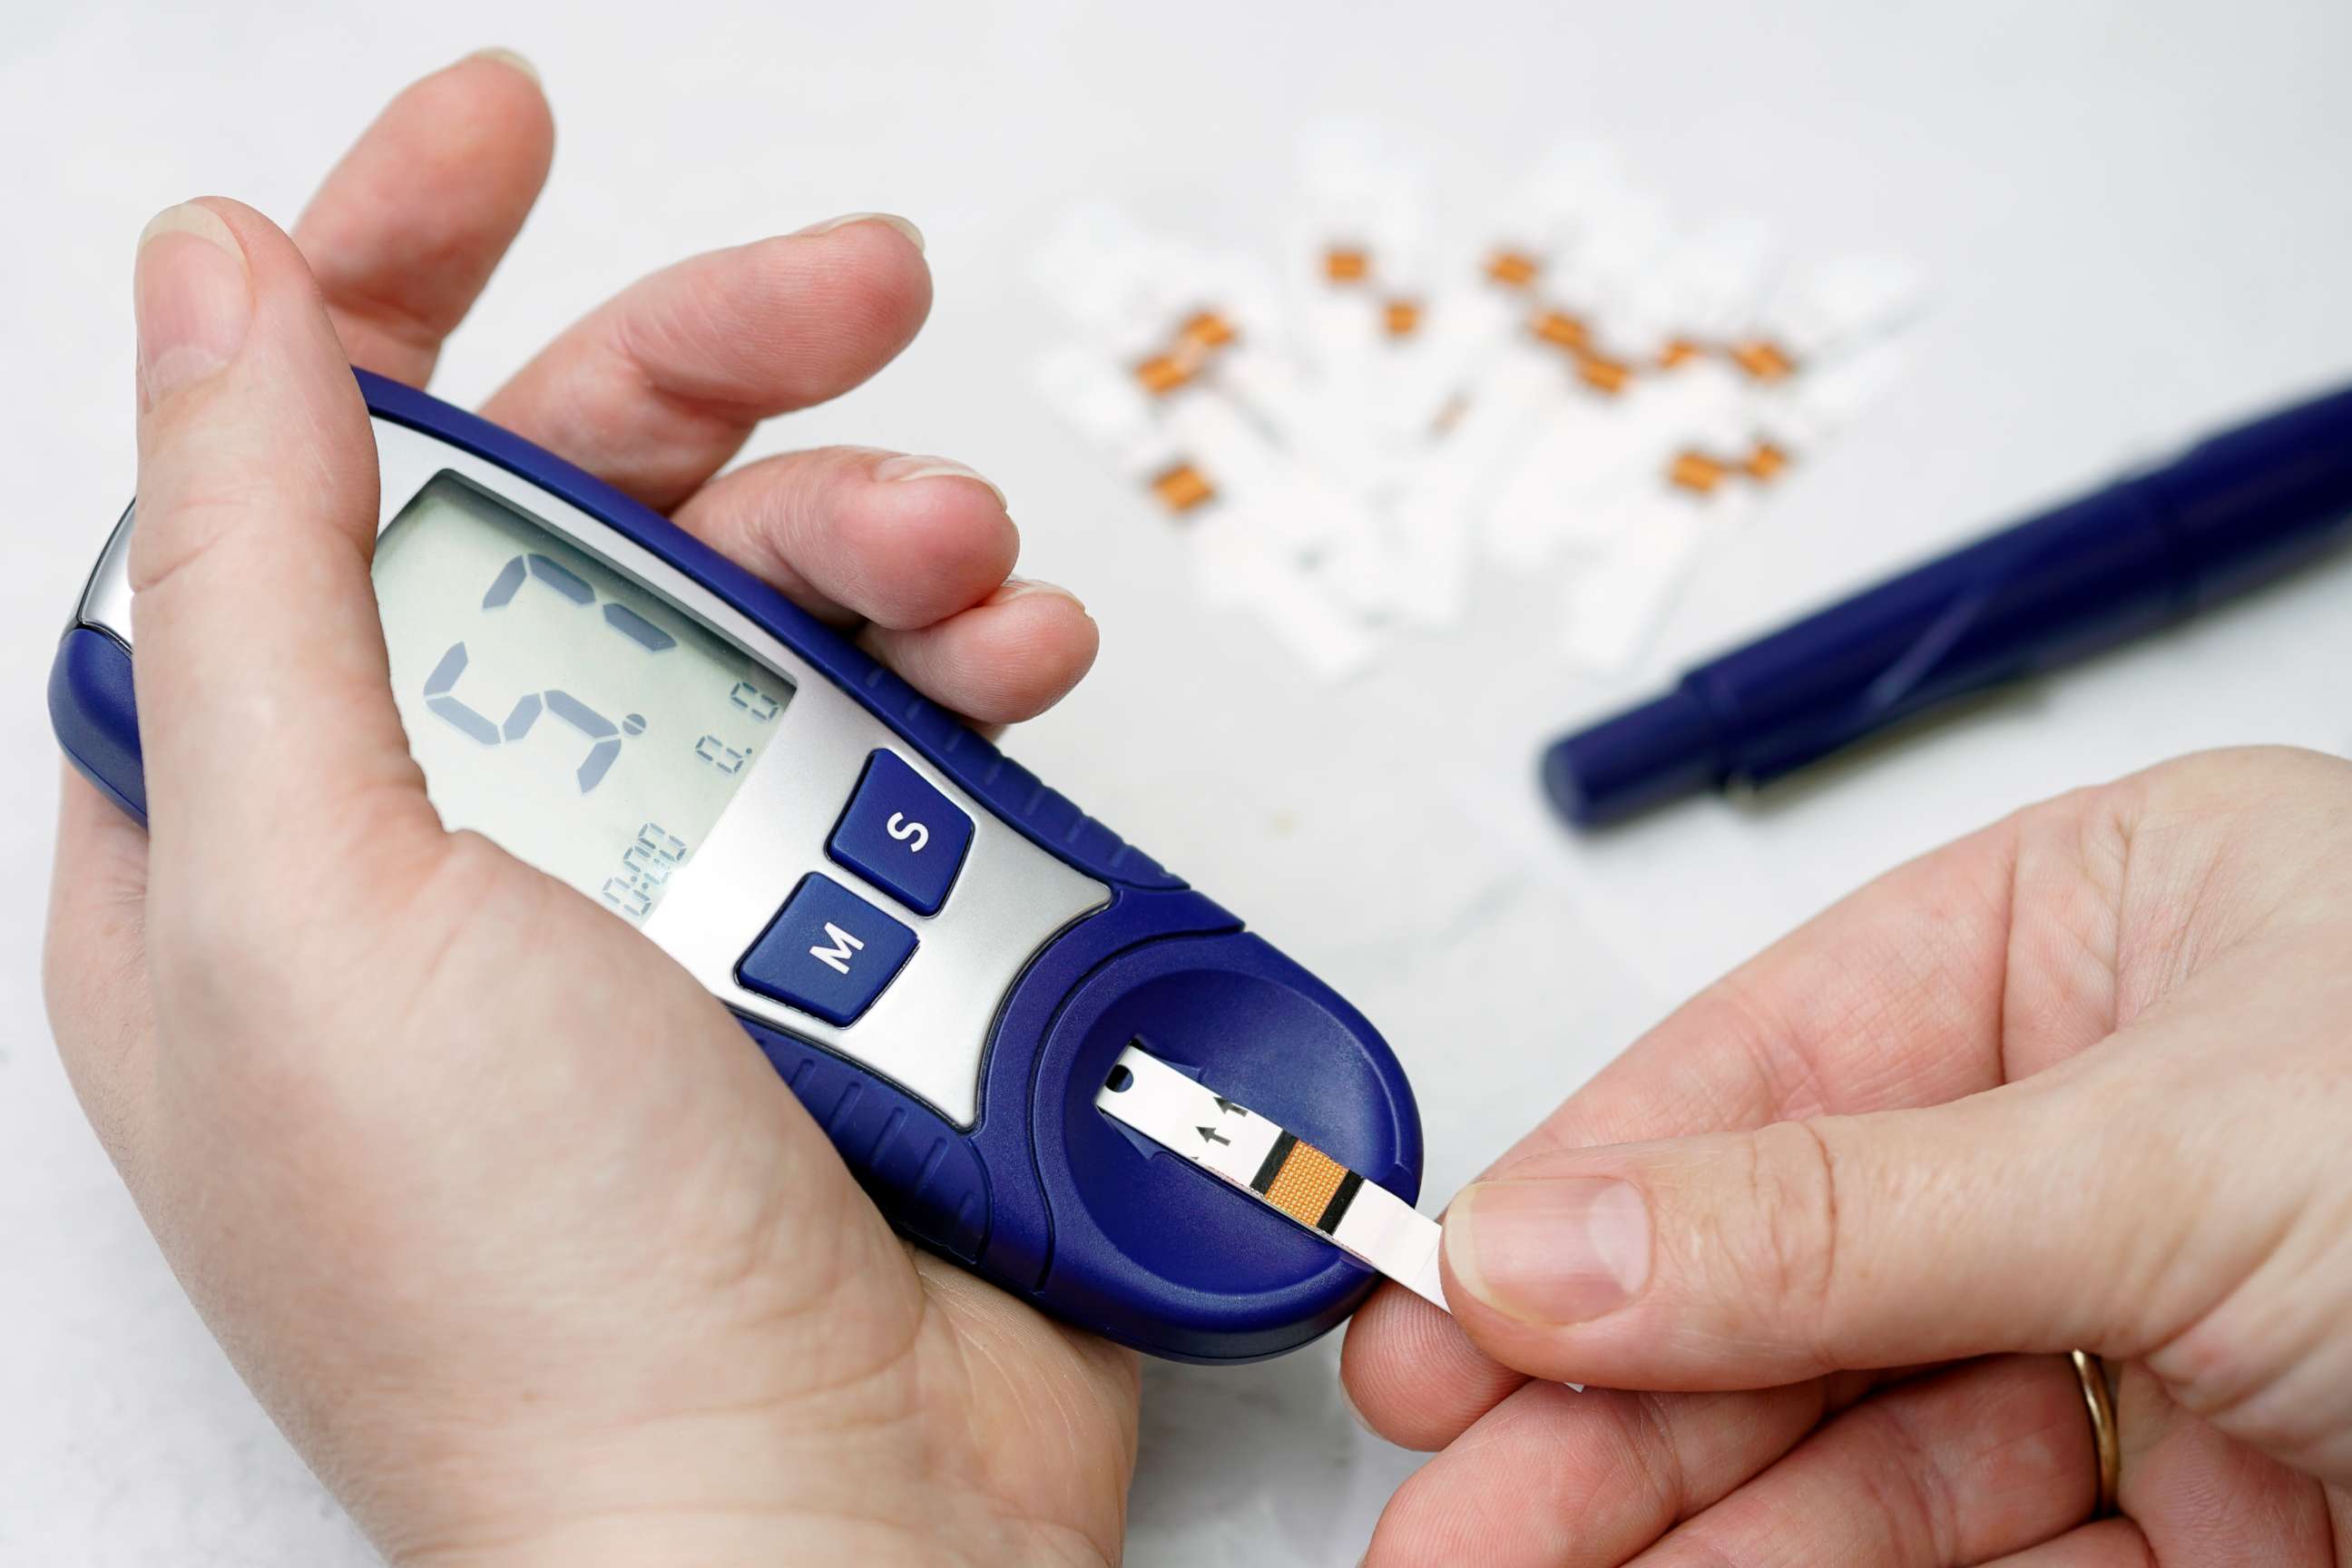 PHOTO: Image Of Person Checking Diabetes.